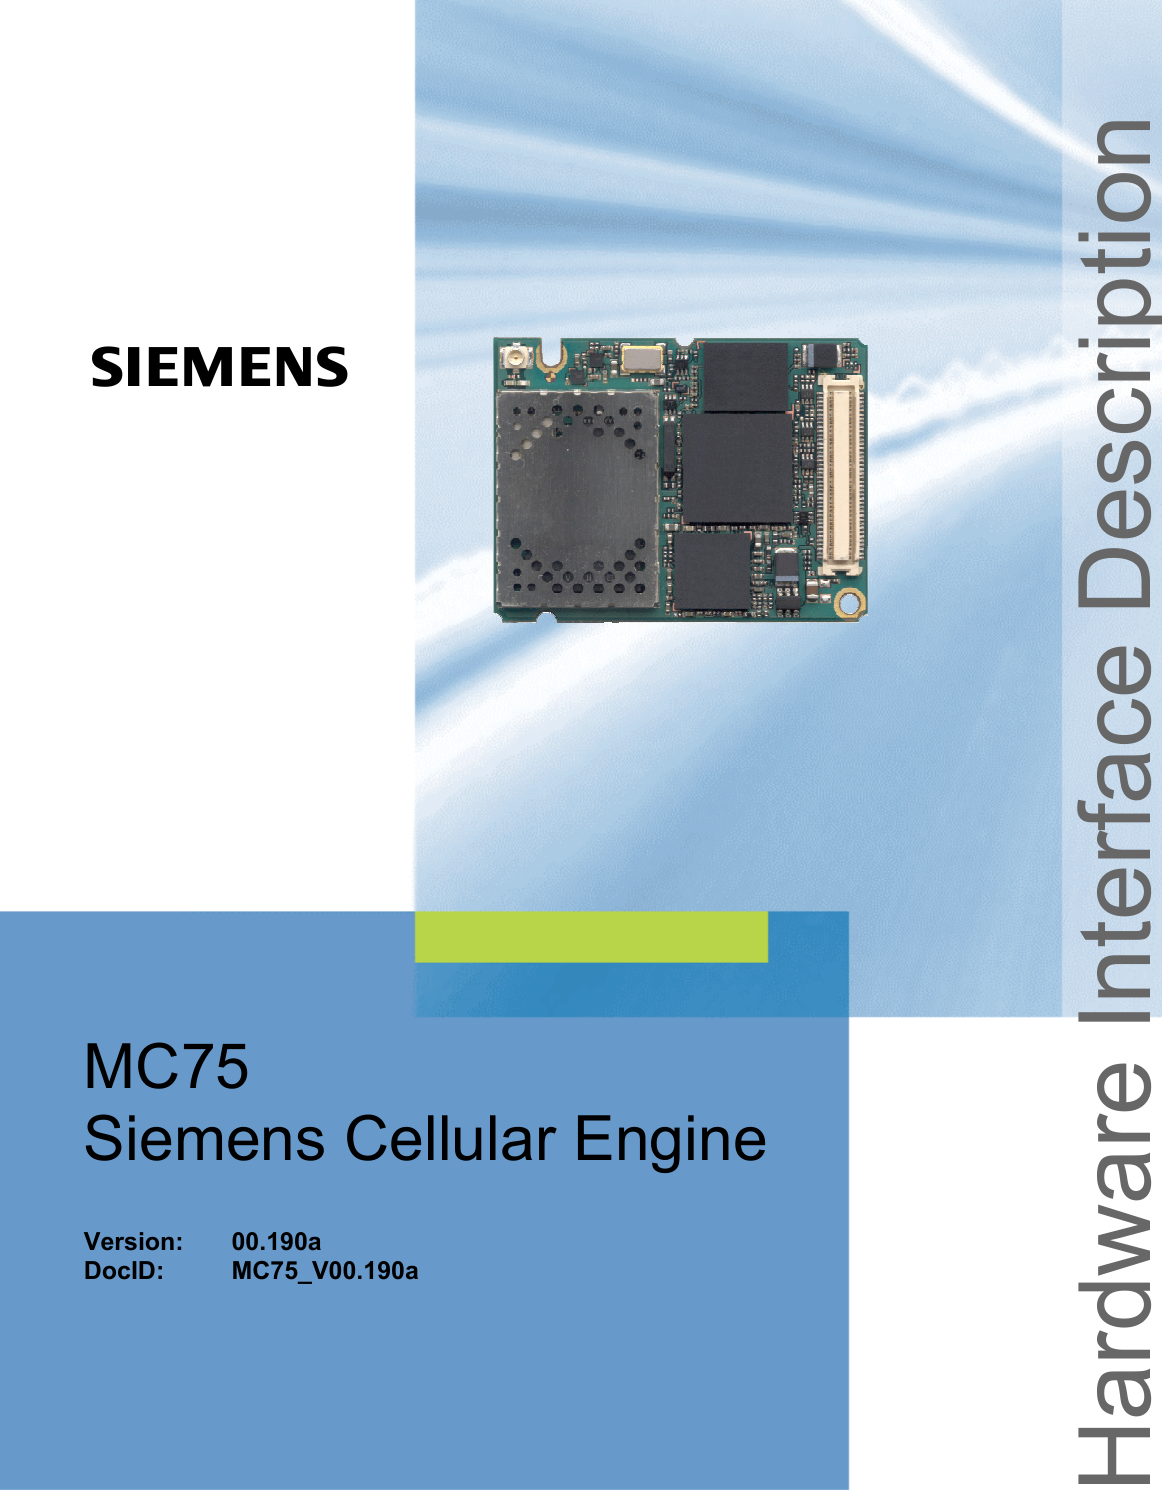   Hardware Interface Description MC75 Siemens Cellular Engine   Version: 00.190a DocID: MC75_V00.190a s 